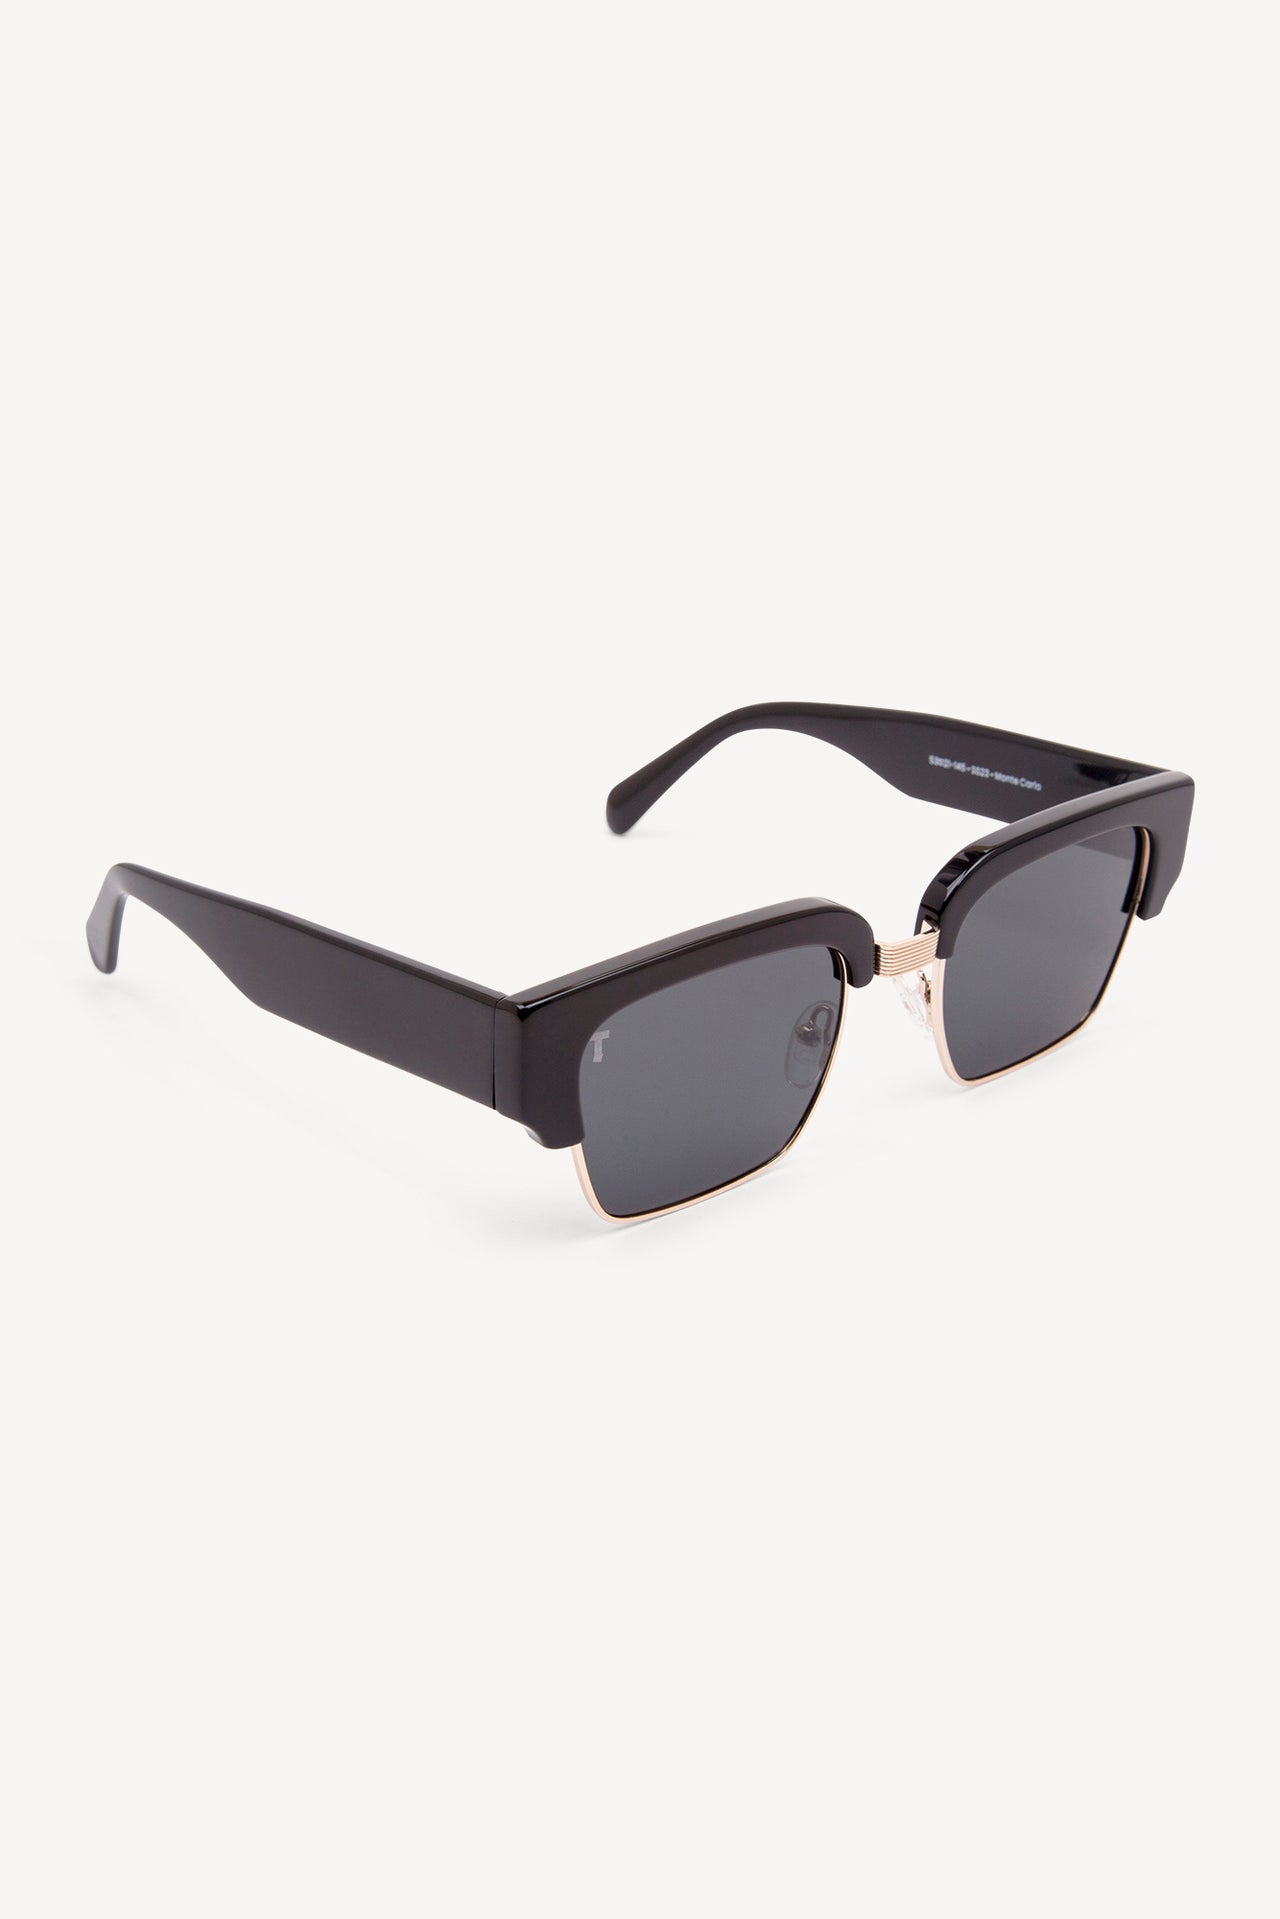 TOATIE Monte Carlo Sunglasses BLACK/BLACK